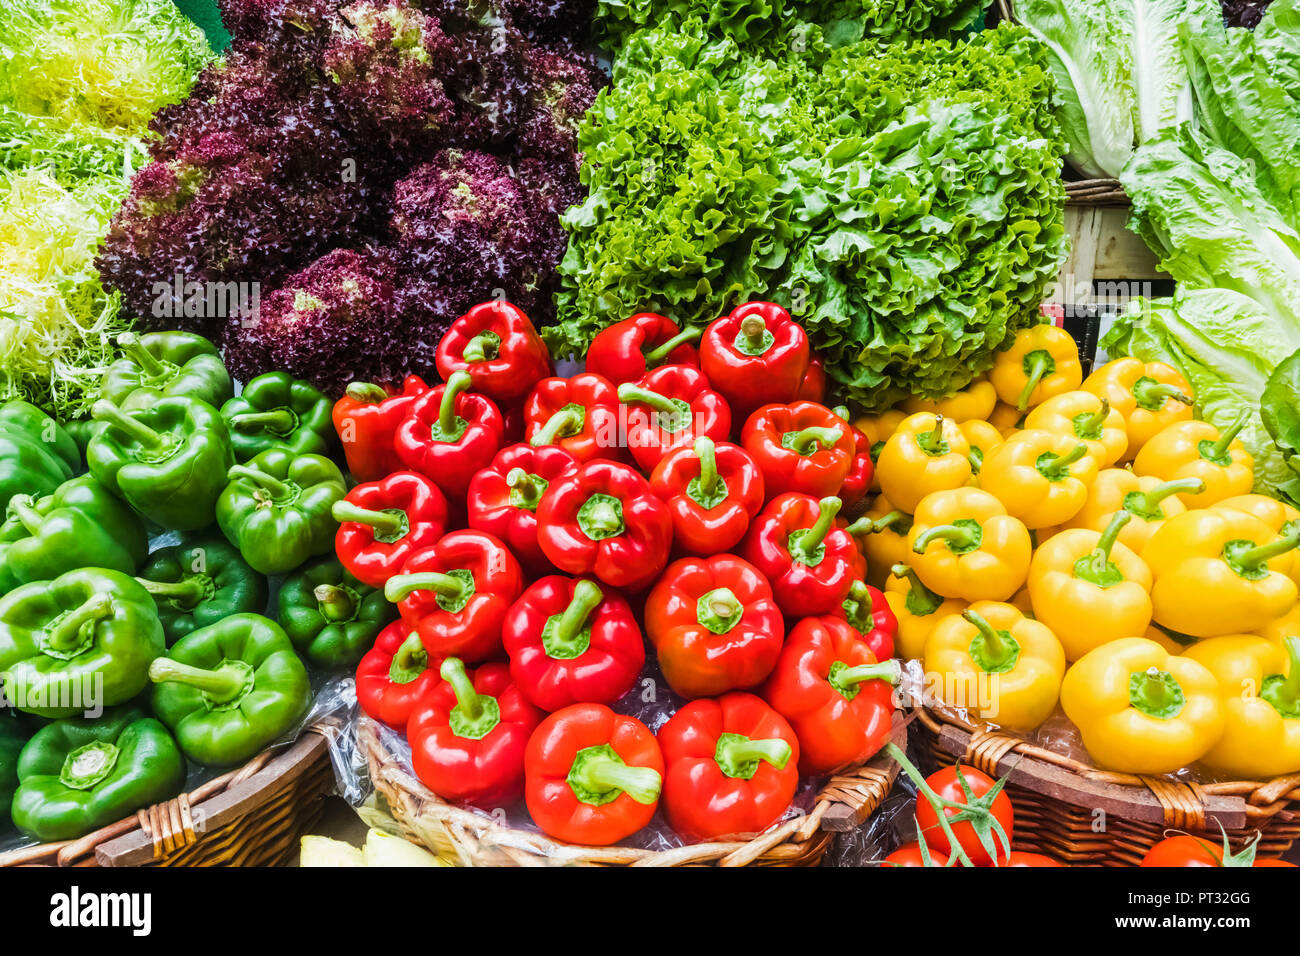 https://c8.alamy.com/comp/PT32GG/england-london-southwark-london-bridge-city-borough-market-fruit-and-vegetable-shop-display-of-peppers-and-lettuce-PT32GG.jpg